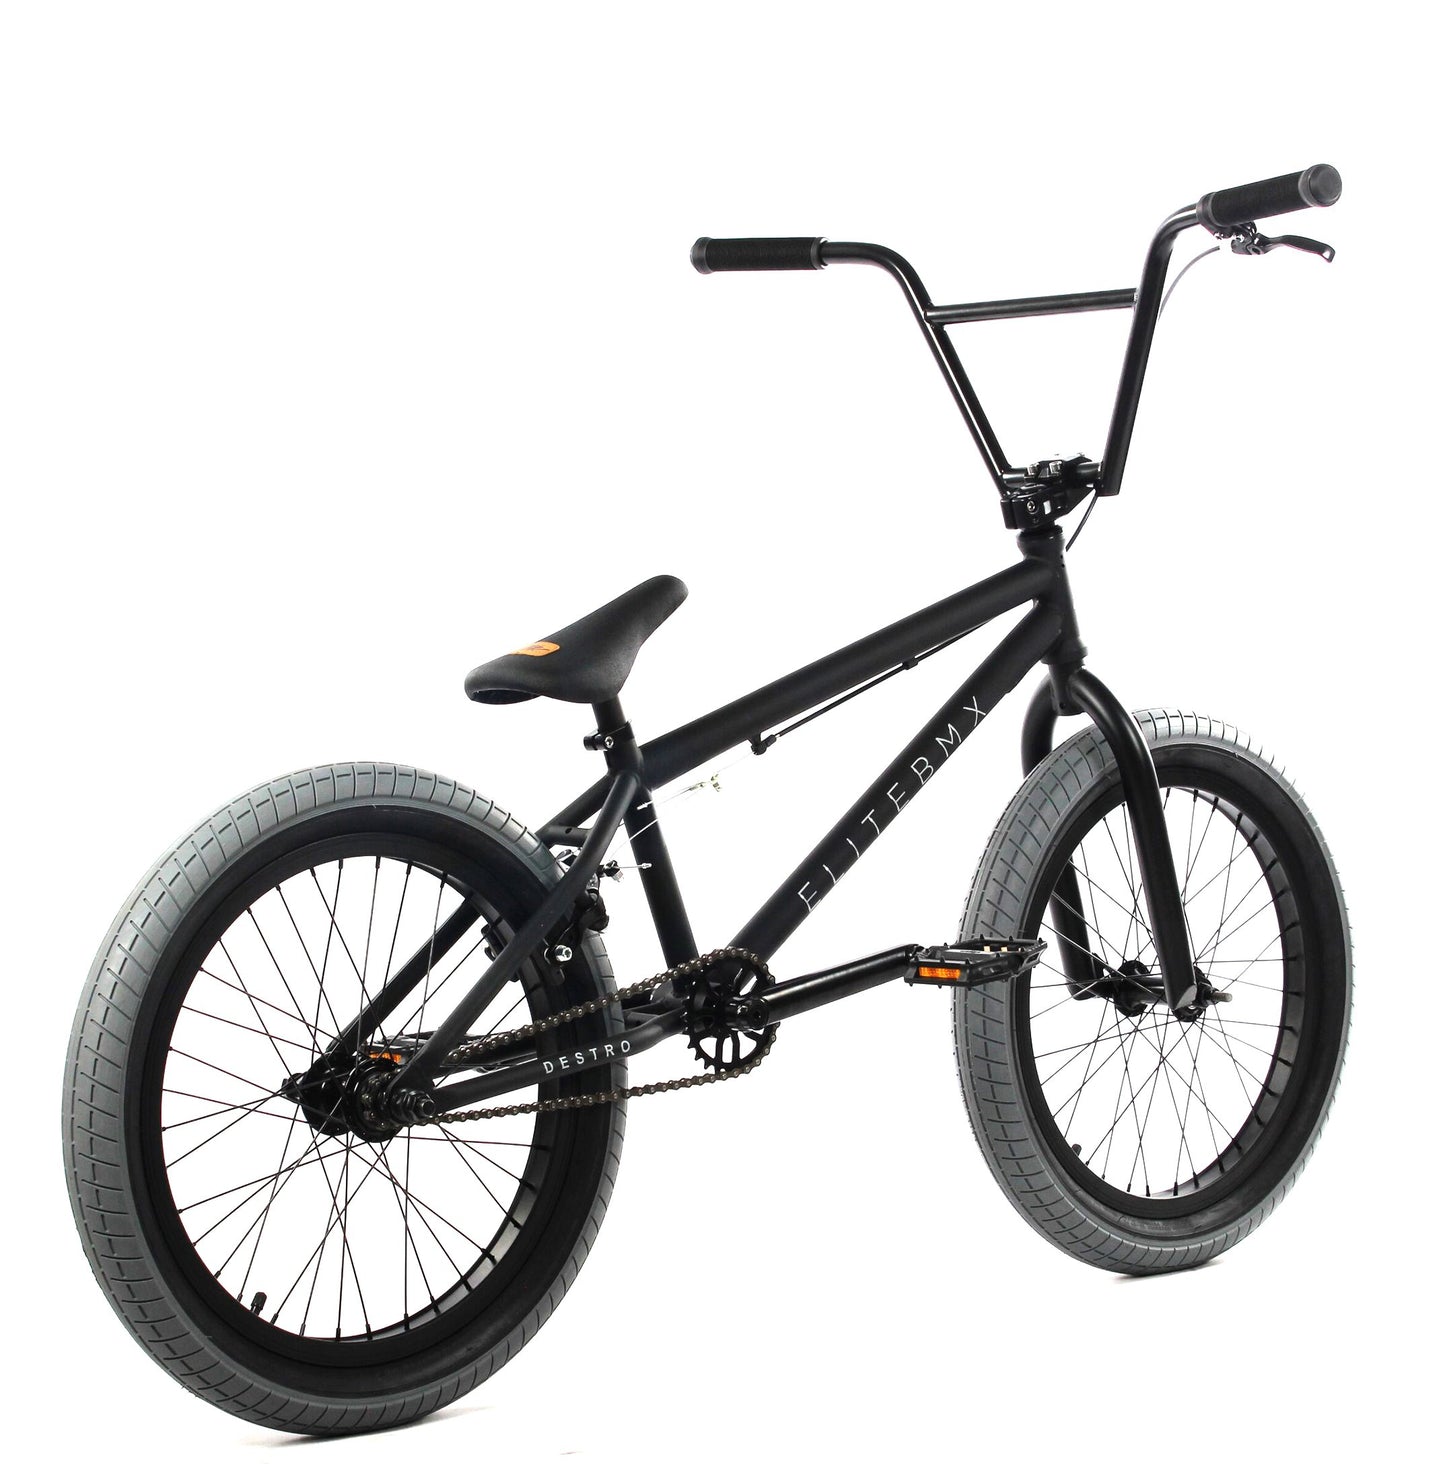 Destro BMX Bike - Black Grey | Elite BMX Destro Bikes | Desto Bike | Elite BMX Bike | BMX Bikes | Elite Bikes | Affordable Bikes | Affordable BMX Bikes | Bike Lovers USA